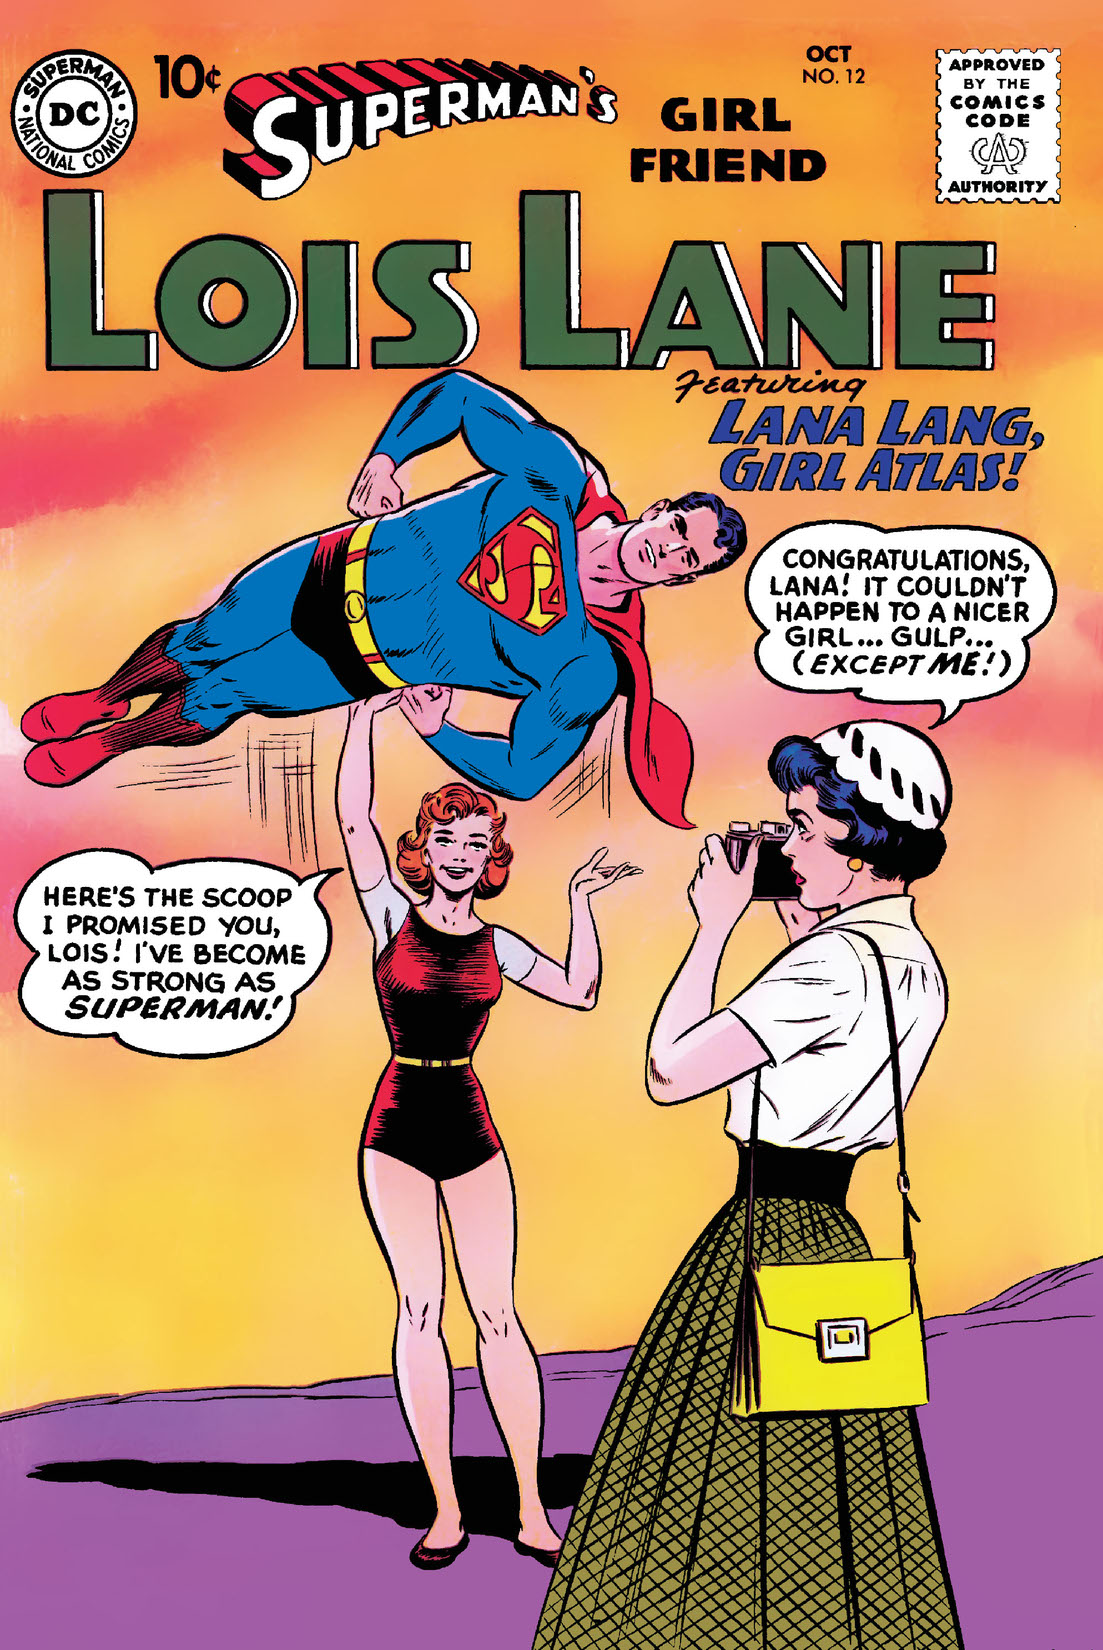 Superman's Girl Friend Lois Lane #12 preview images